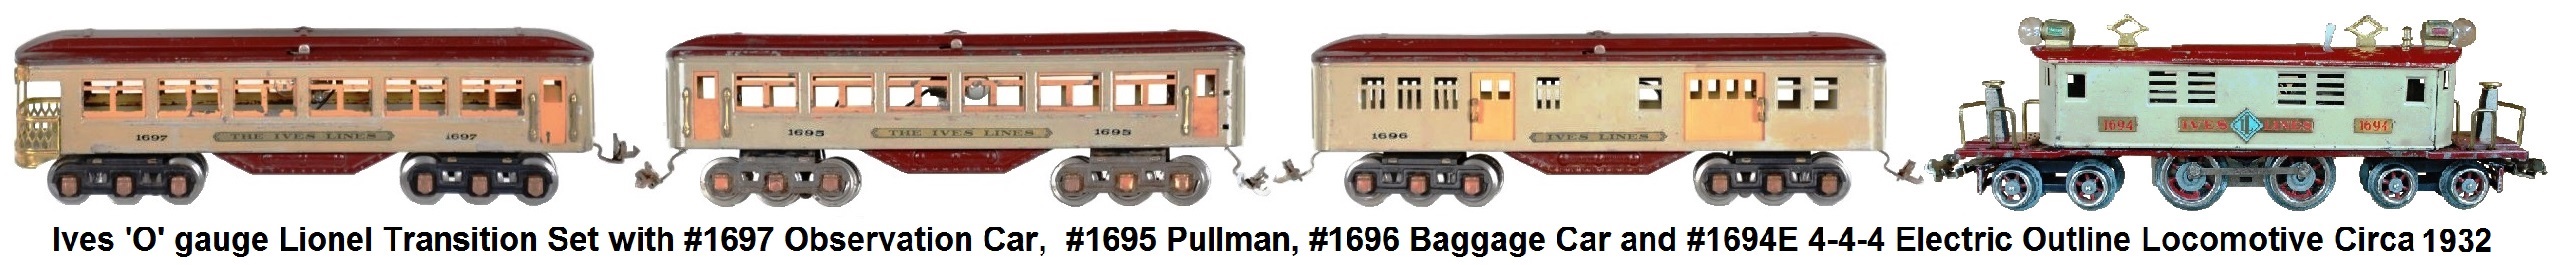 Ives 'O' gauge Lionel transition set includes a #1697 observation car, #1695 Pullman, #1696 baggage car and #1694E 4-4-4 Electric outline locomotive circa 1932